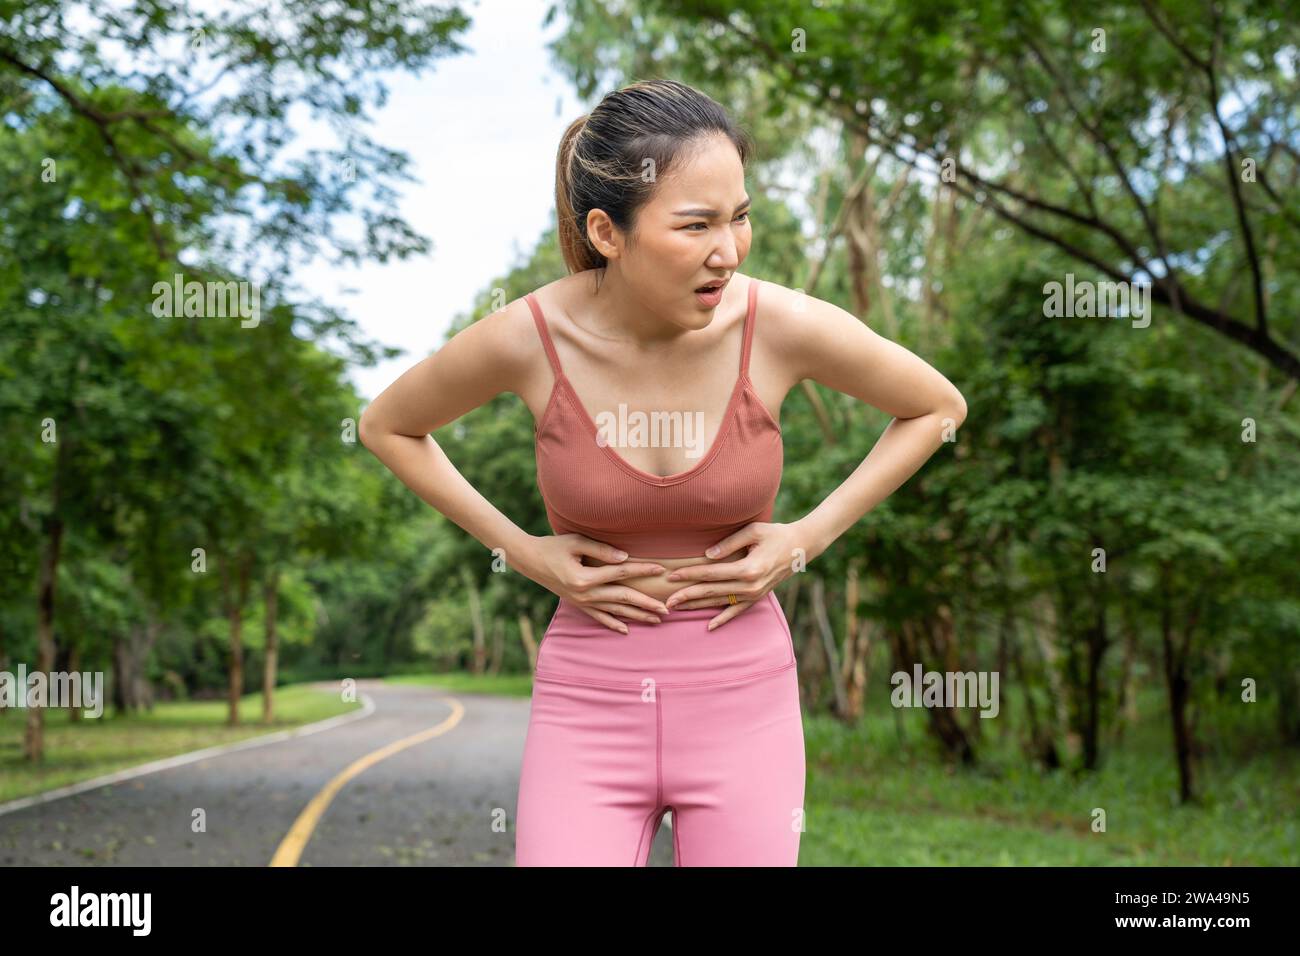 Asian Woman in Undergarments Having Period Pain Stock Photo - Image of  abdoman, beautiful: 21341650